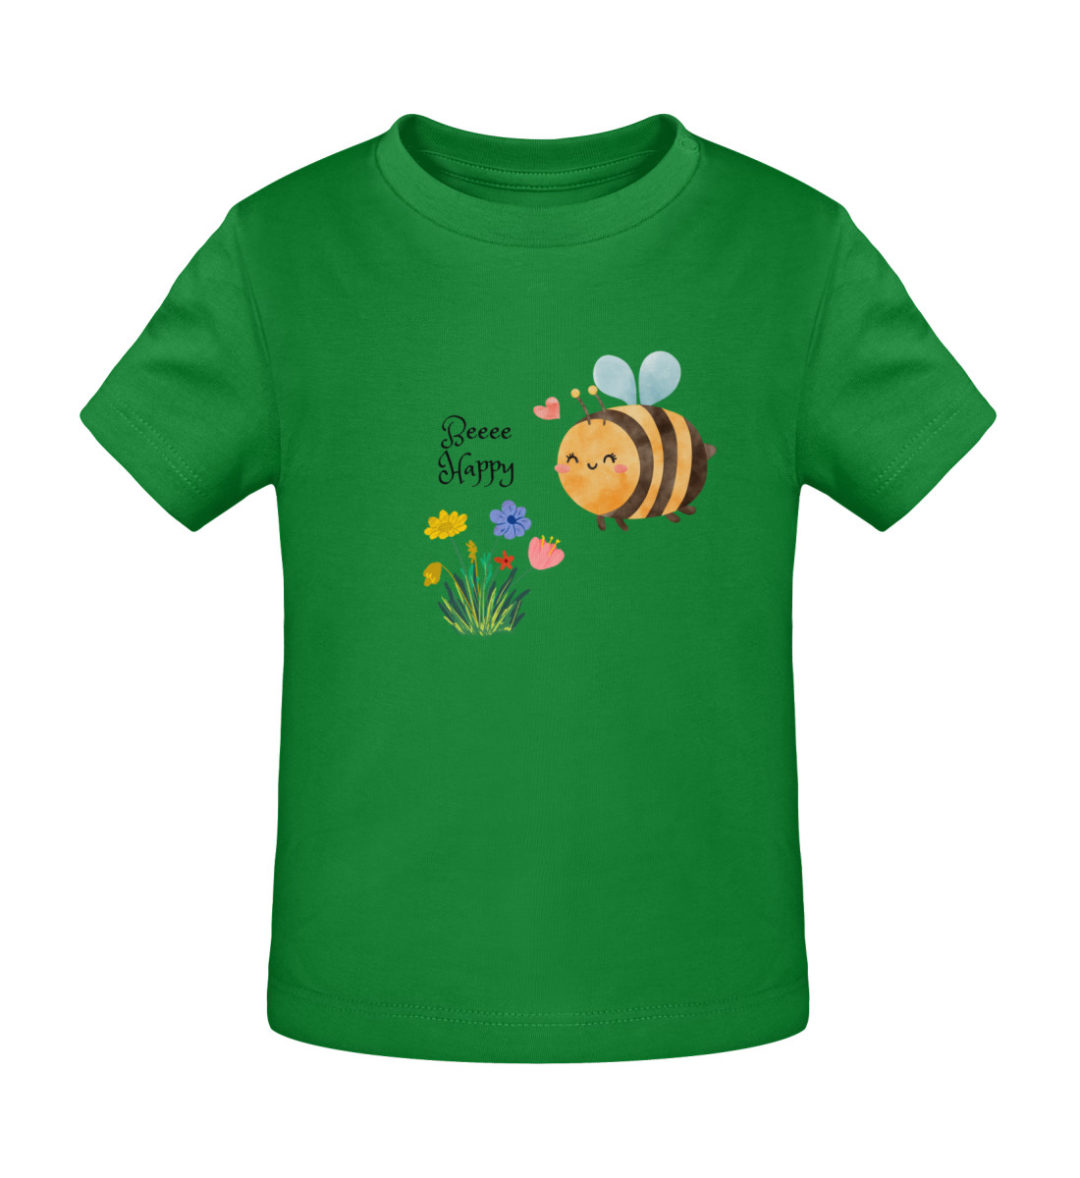 Beee happy - Baby Creator T-Shirt ST/ST-6879